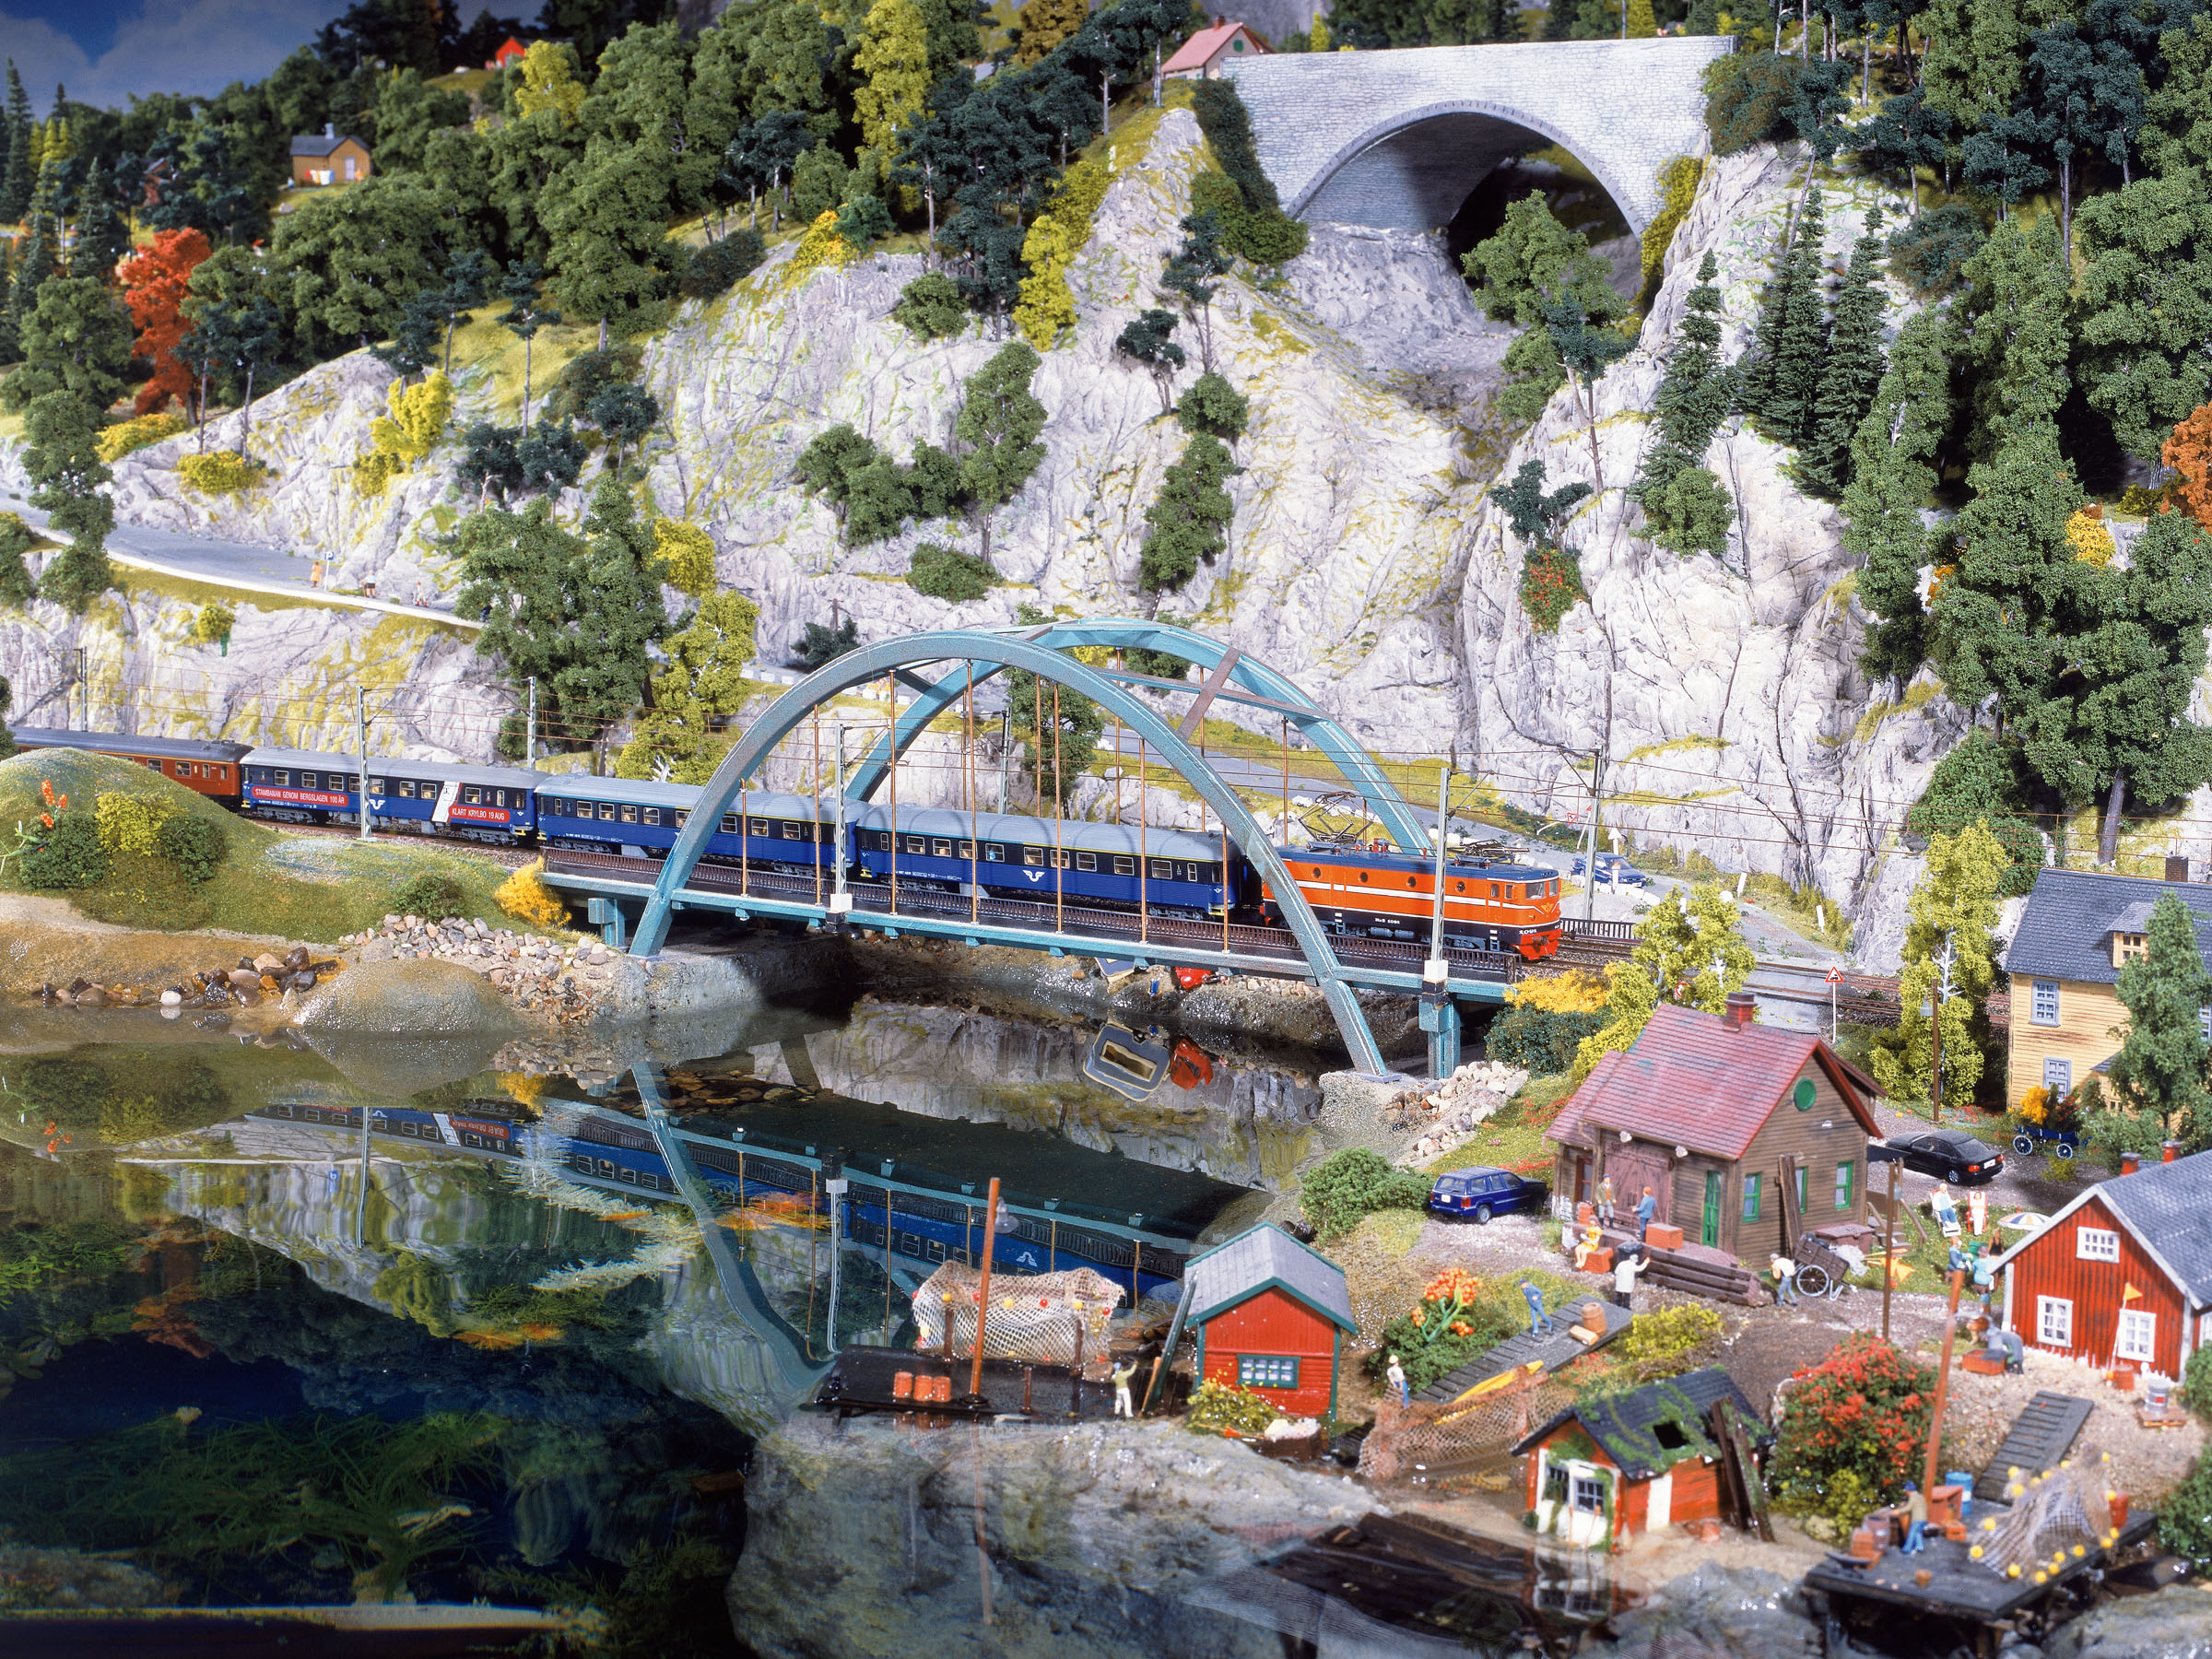 鉄道模型, modelljärnväg, makieta kolejowa - Fascinating video of the world’s largest HO scale model railway layout - Miniatur Wunderland Germany